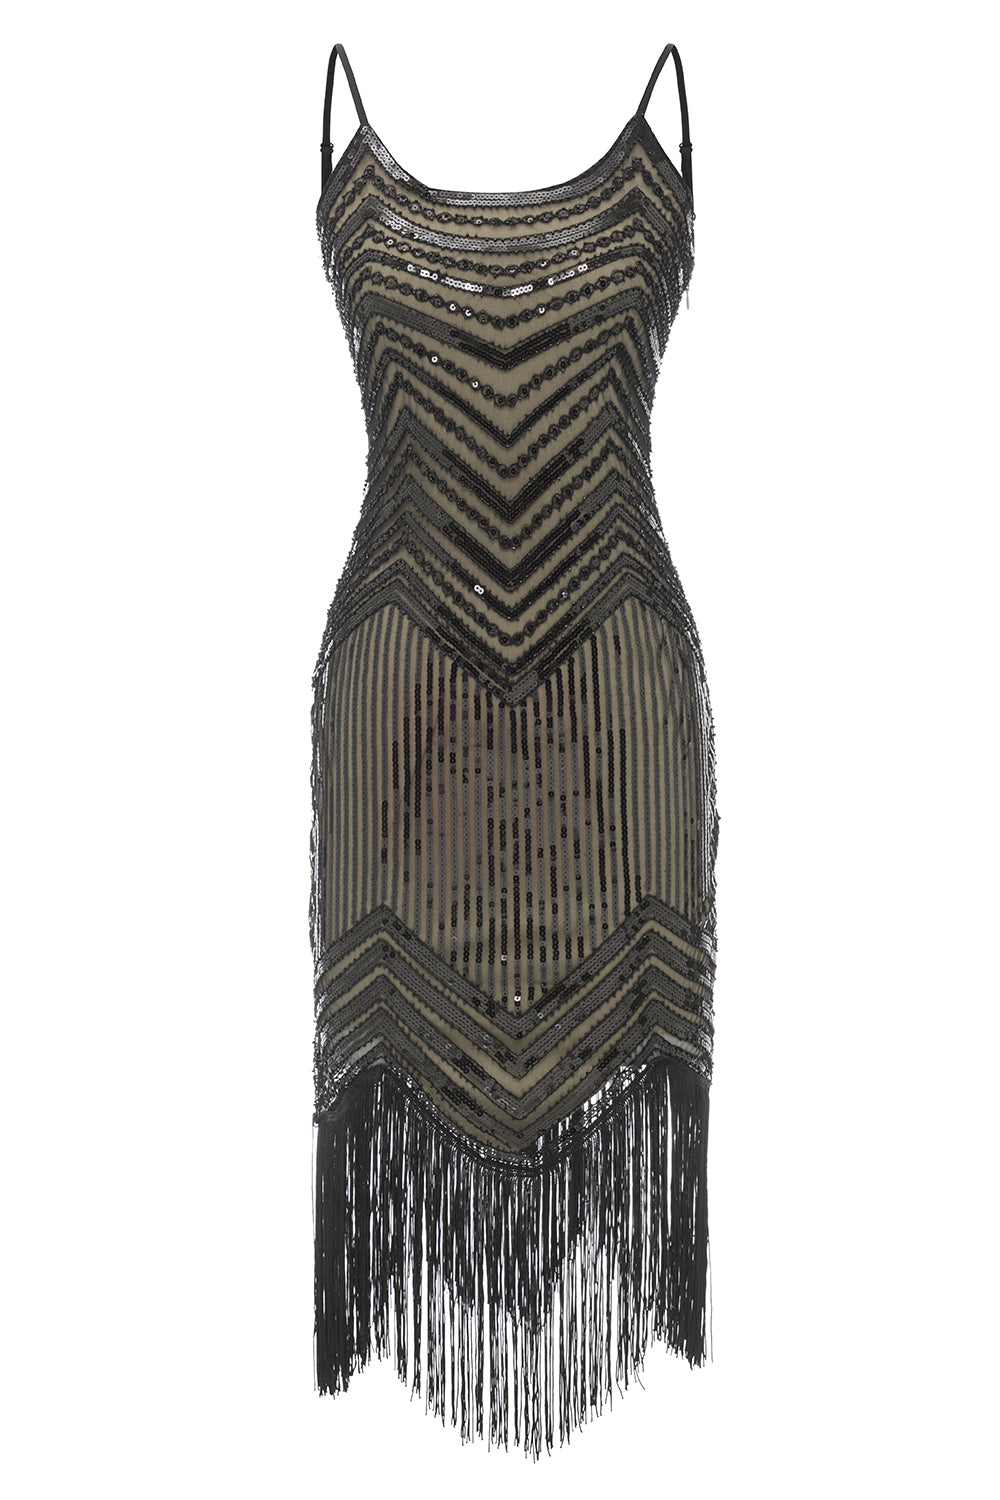 Spaghettiträger Schwarze Aprikose 1920er Jahre Kleid